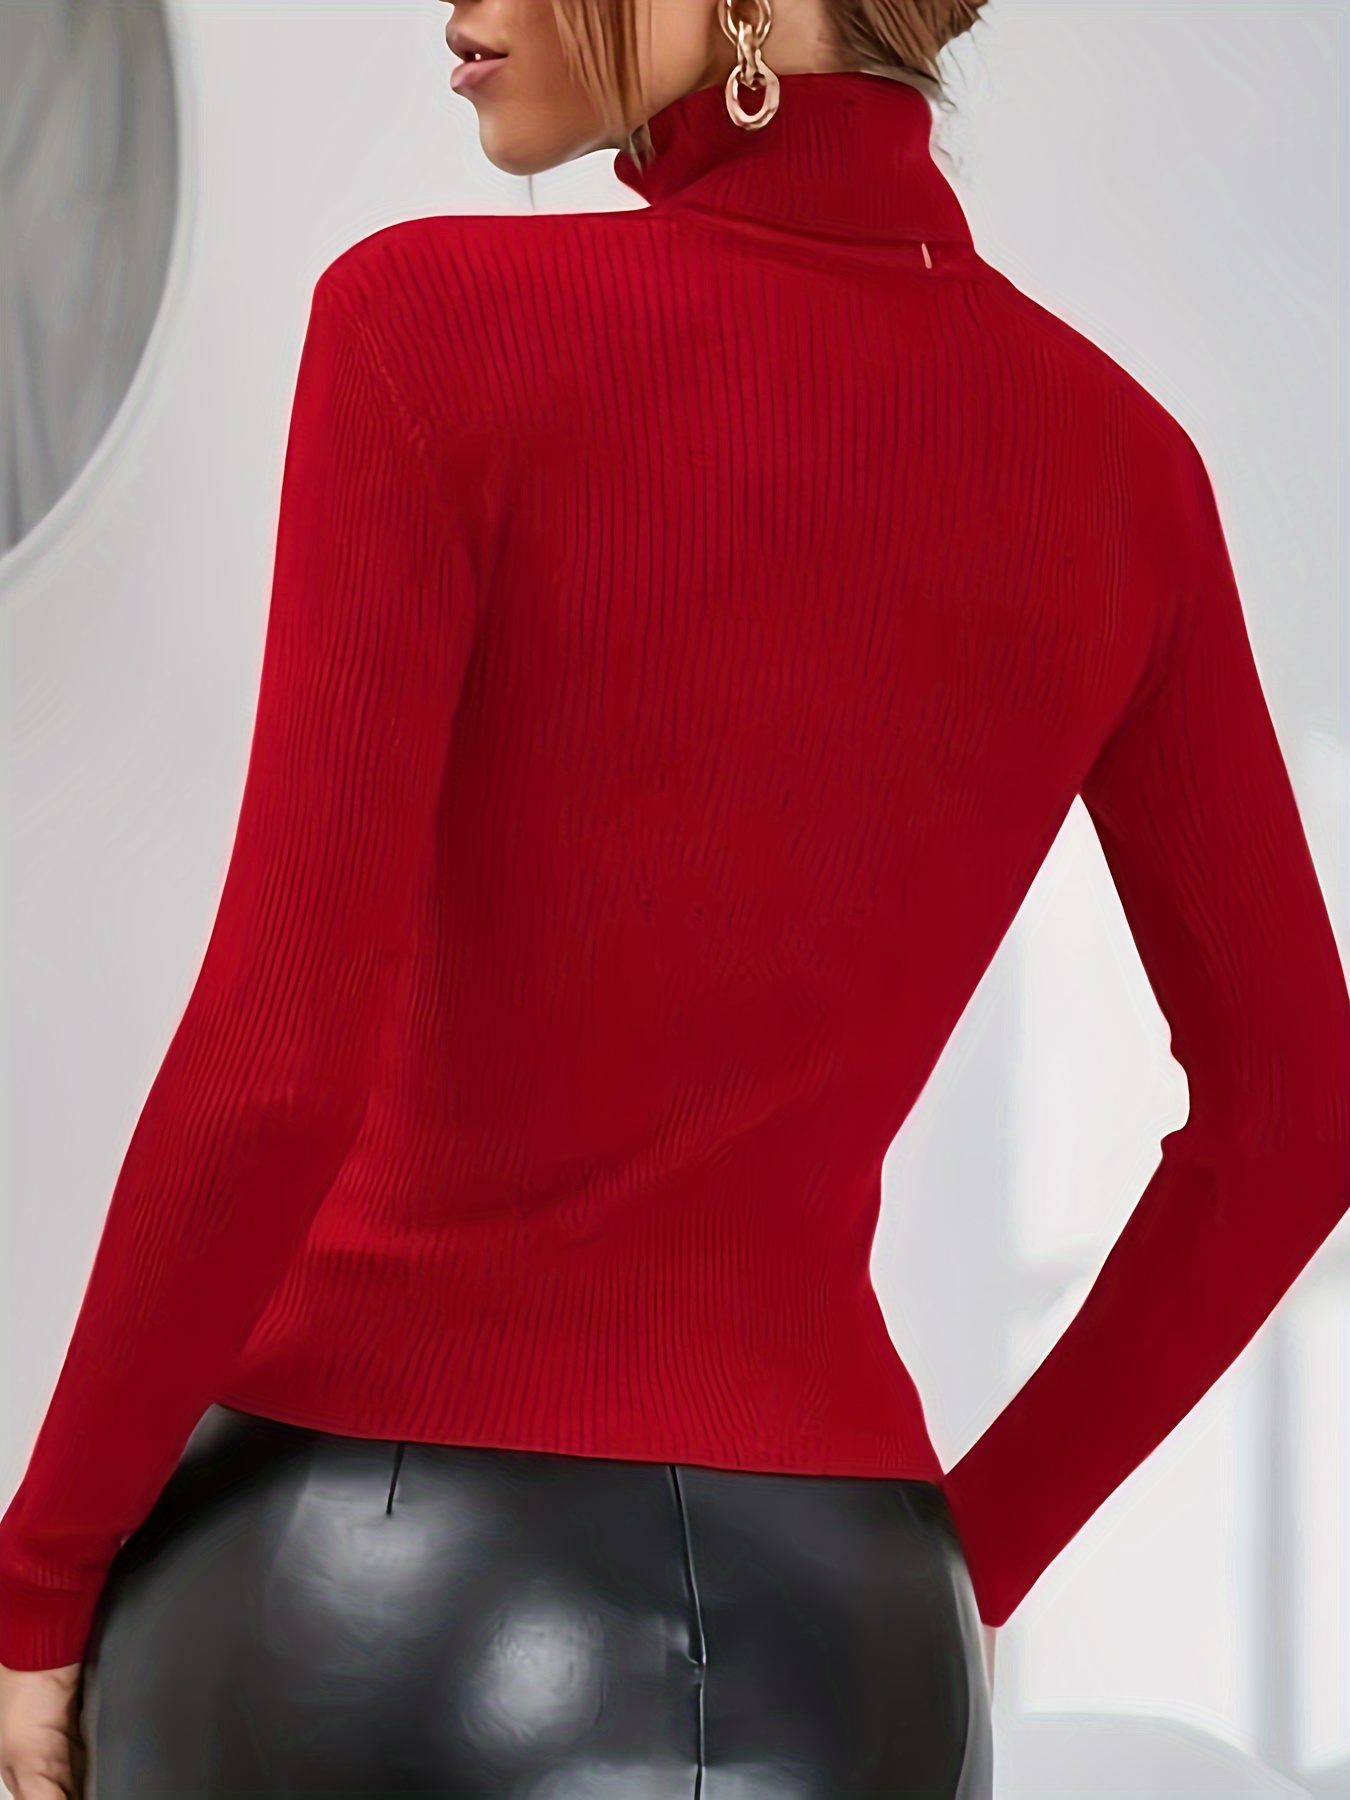 Zapaka Mujer Rojo Jersey de Punto Cuello Alto Manga Larga Suéter